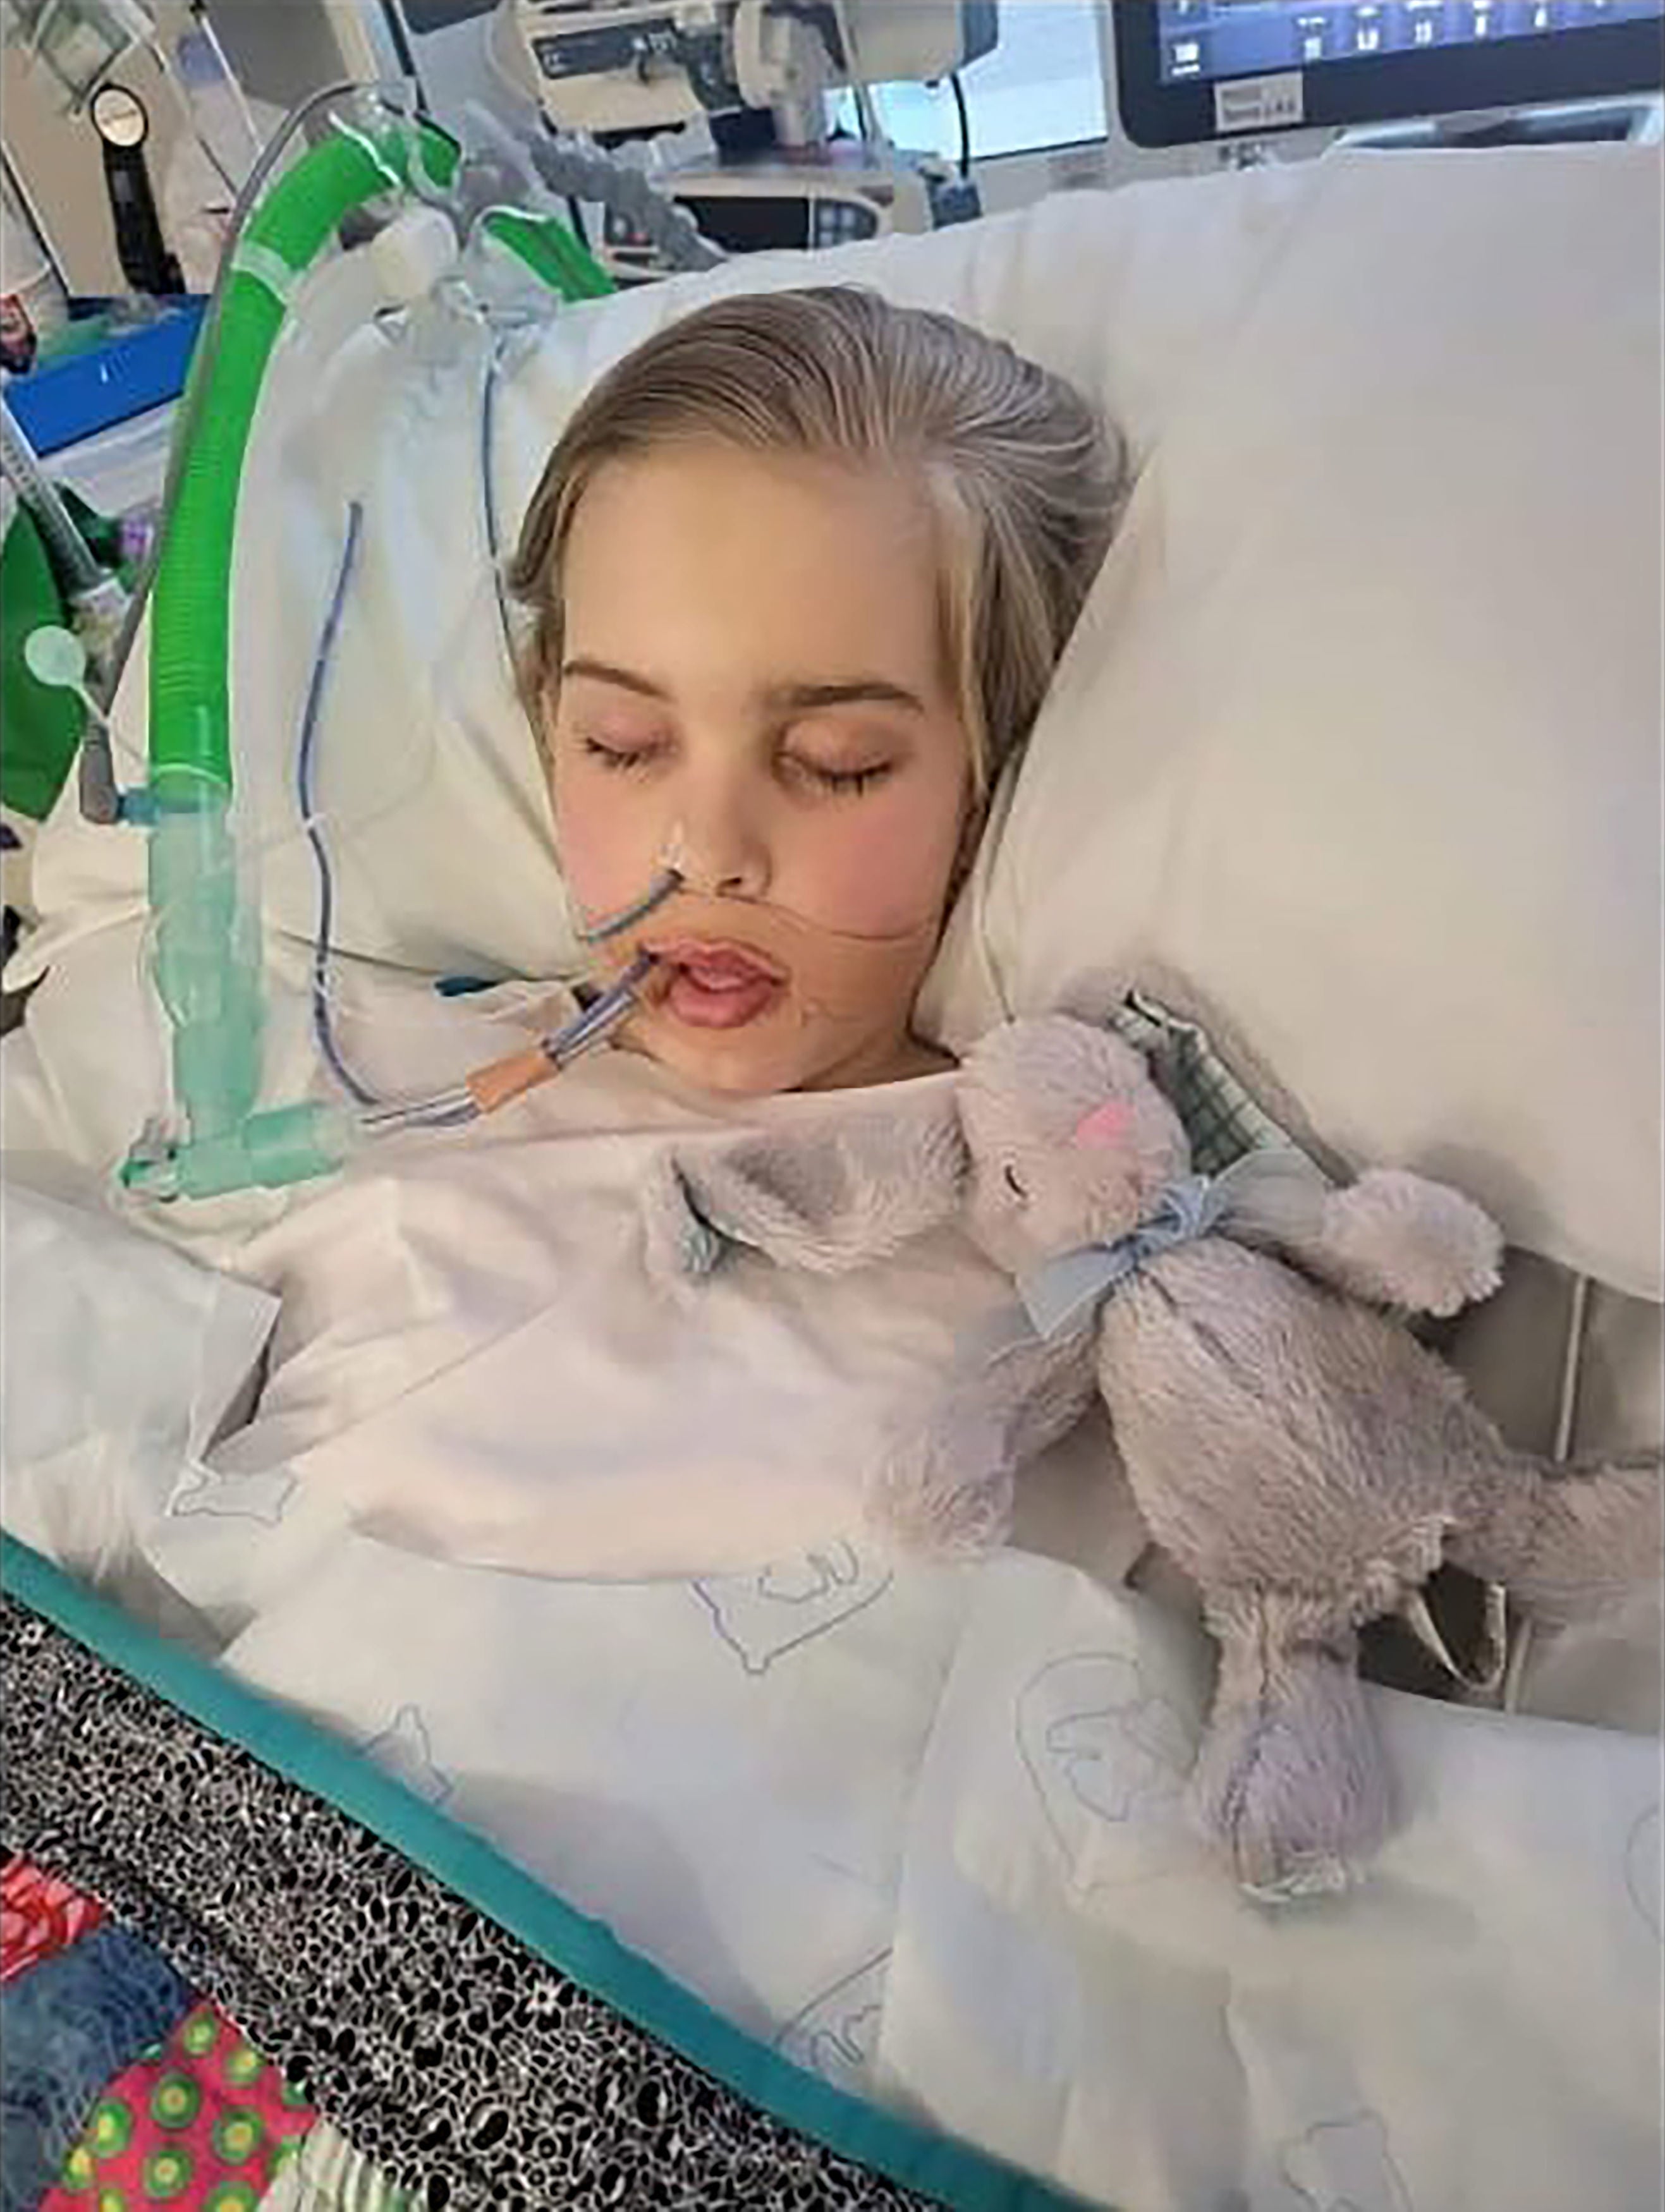 Archie Battersbee, 12, has been in hospital since April